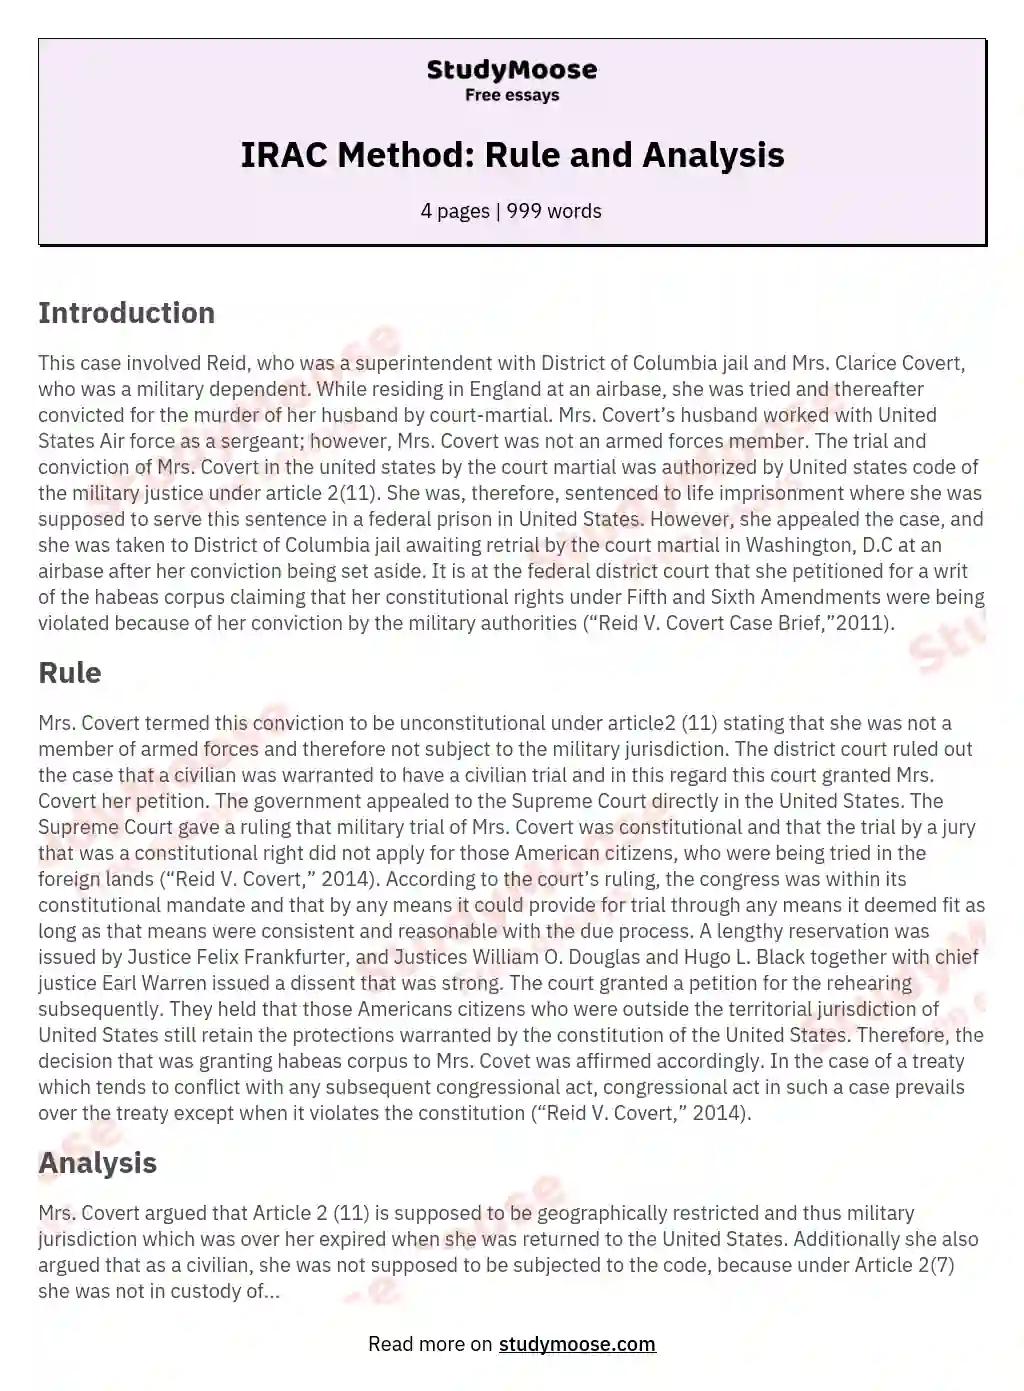 IRAC Method: Rule and Analysis